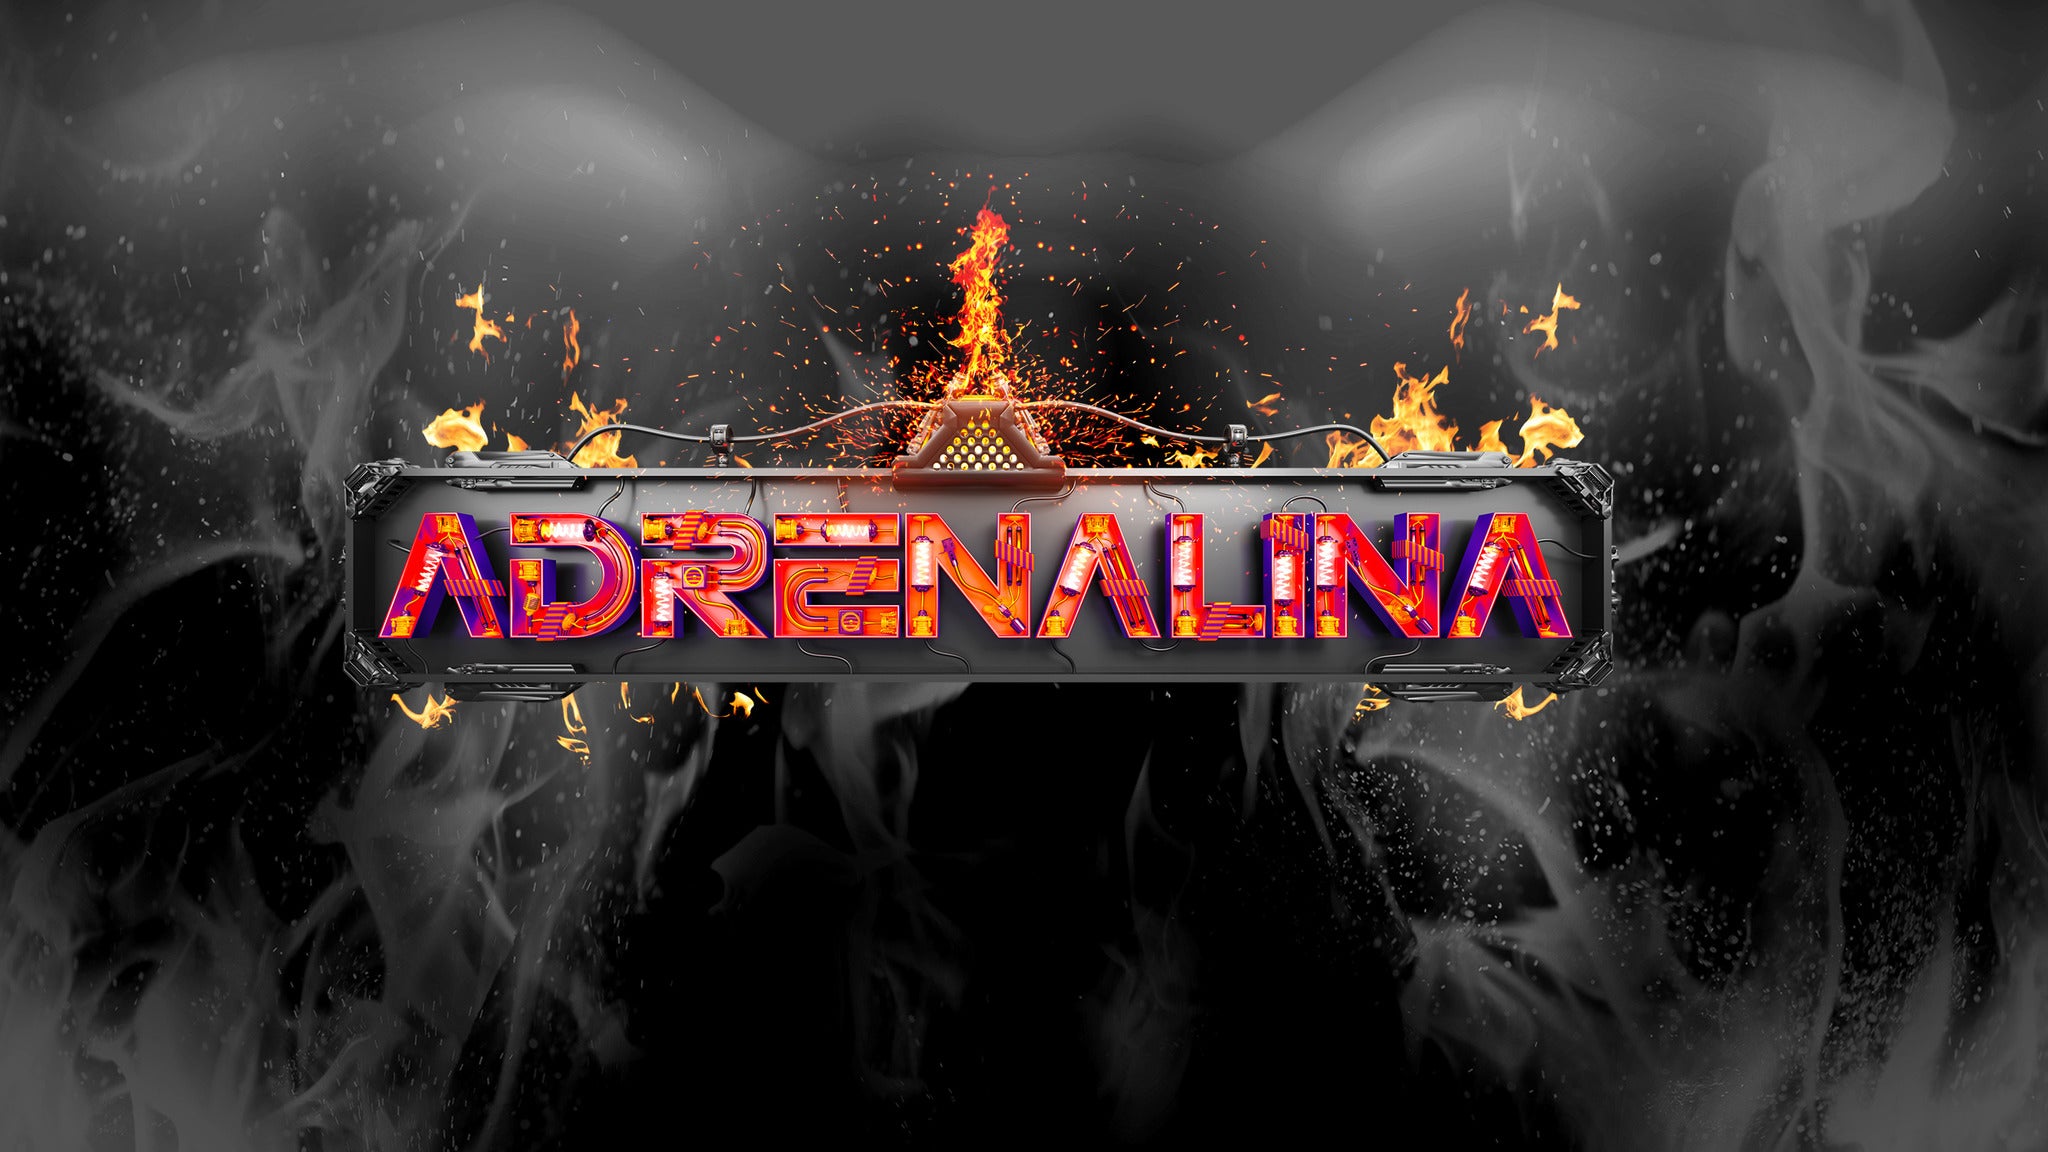 Adrenalina - A Night of Reggaeton, Salsa and Cumbia